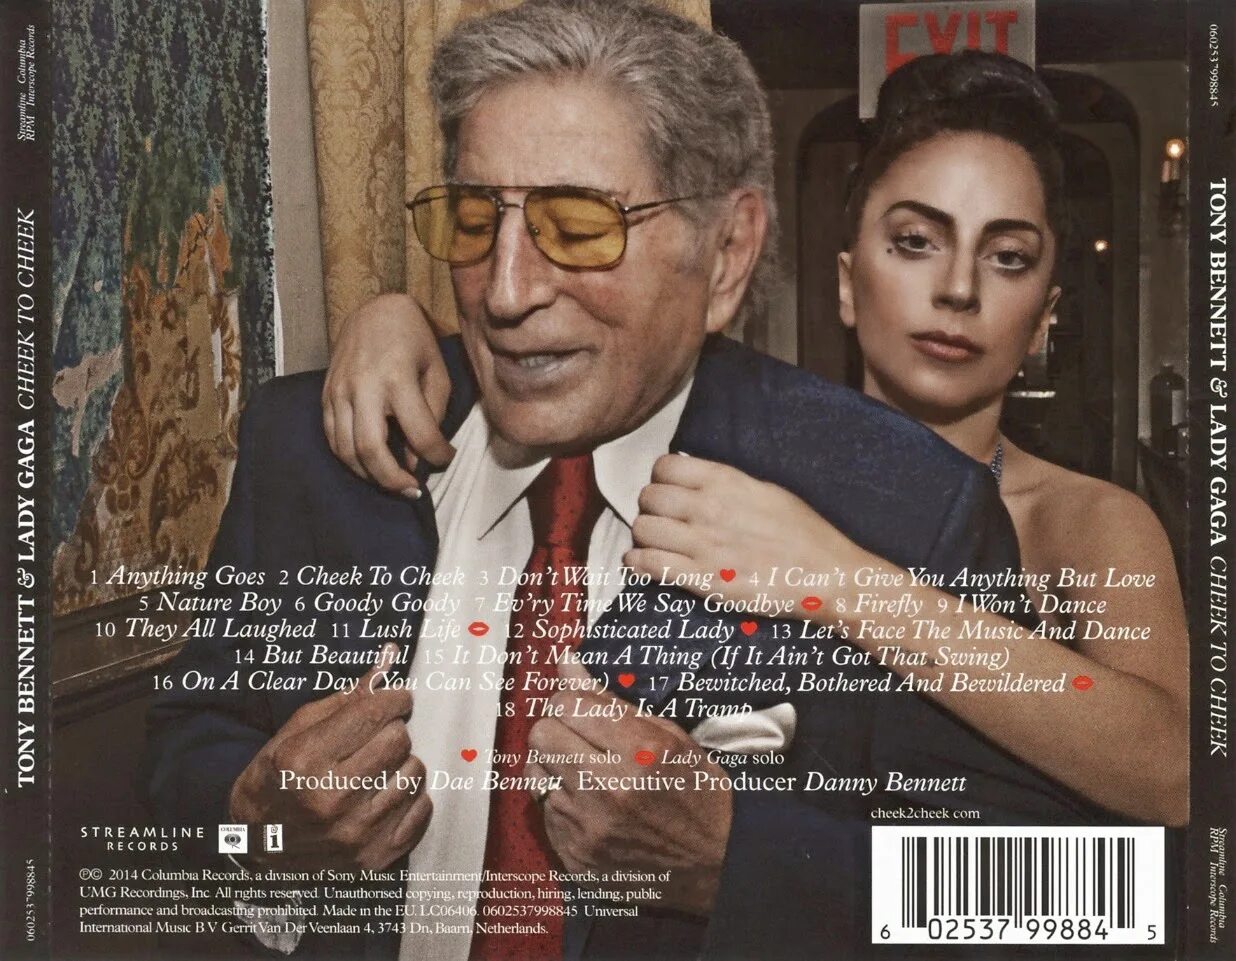 Tony Bennett & Lady Gaga - Cheek to Cheek. Lady Gaga & Tony Bennett - Love for sale (180 gr). Обложки альбомов Tony Bennett & Lady Gaga - 2021 - Love for sale. Cheek to cheek